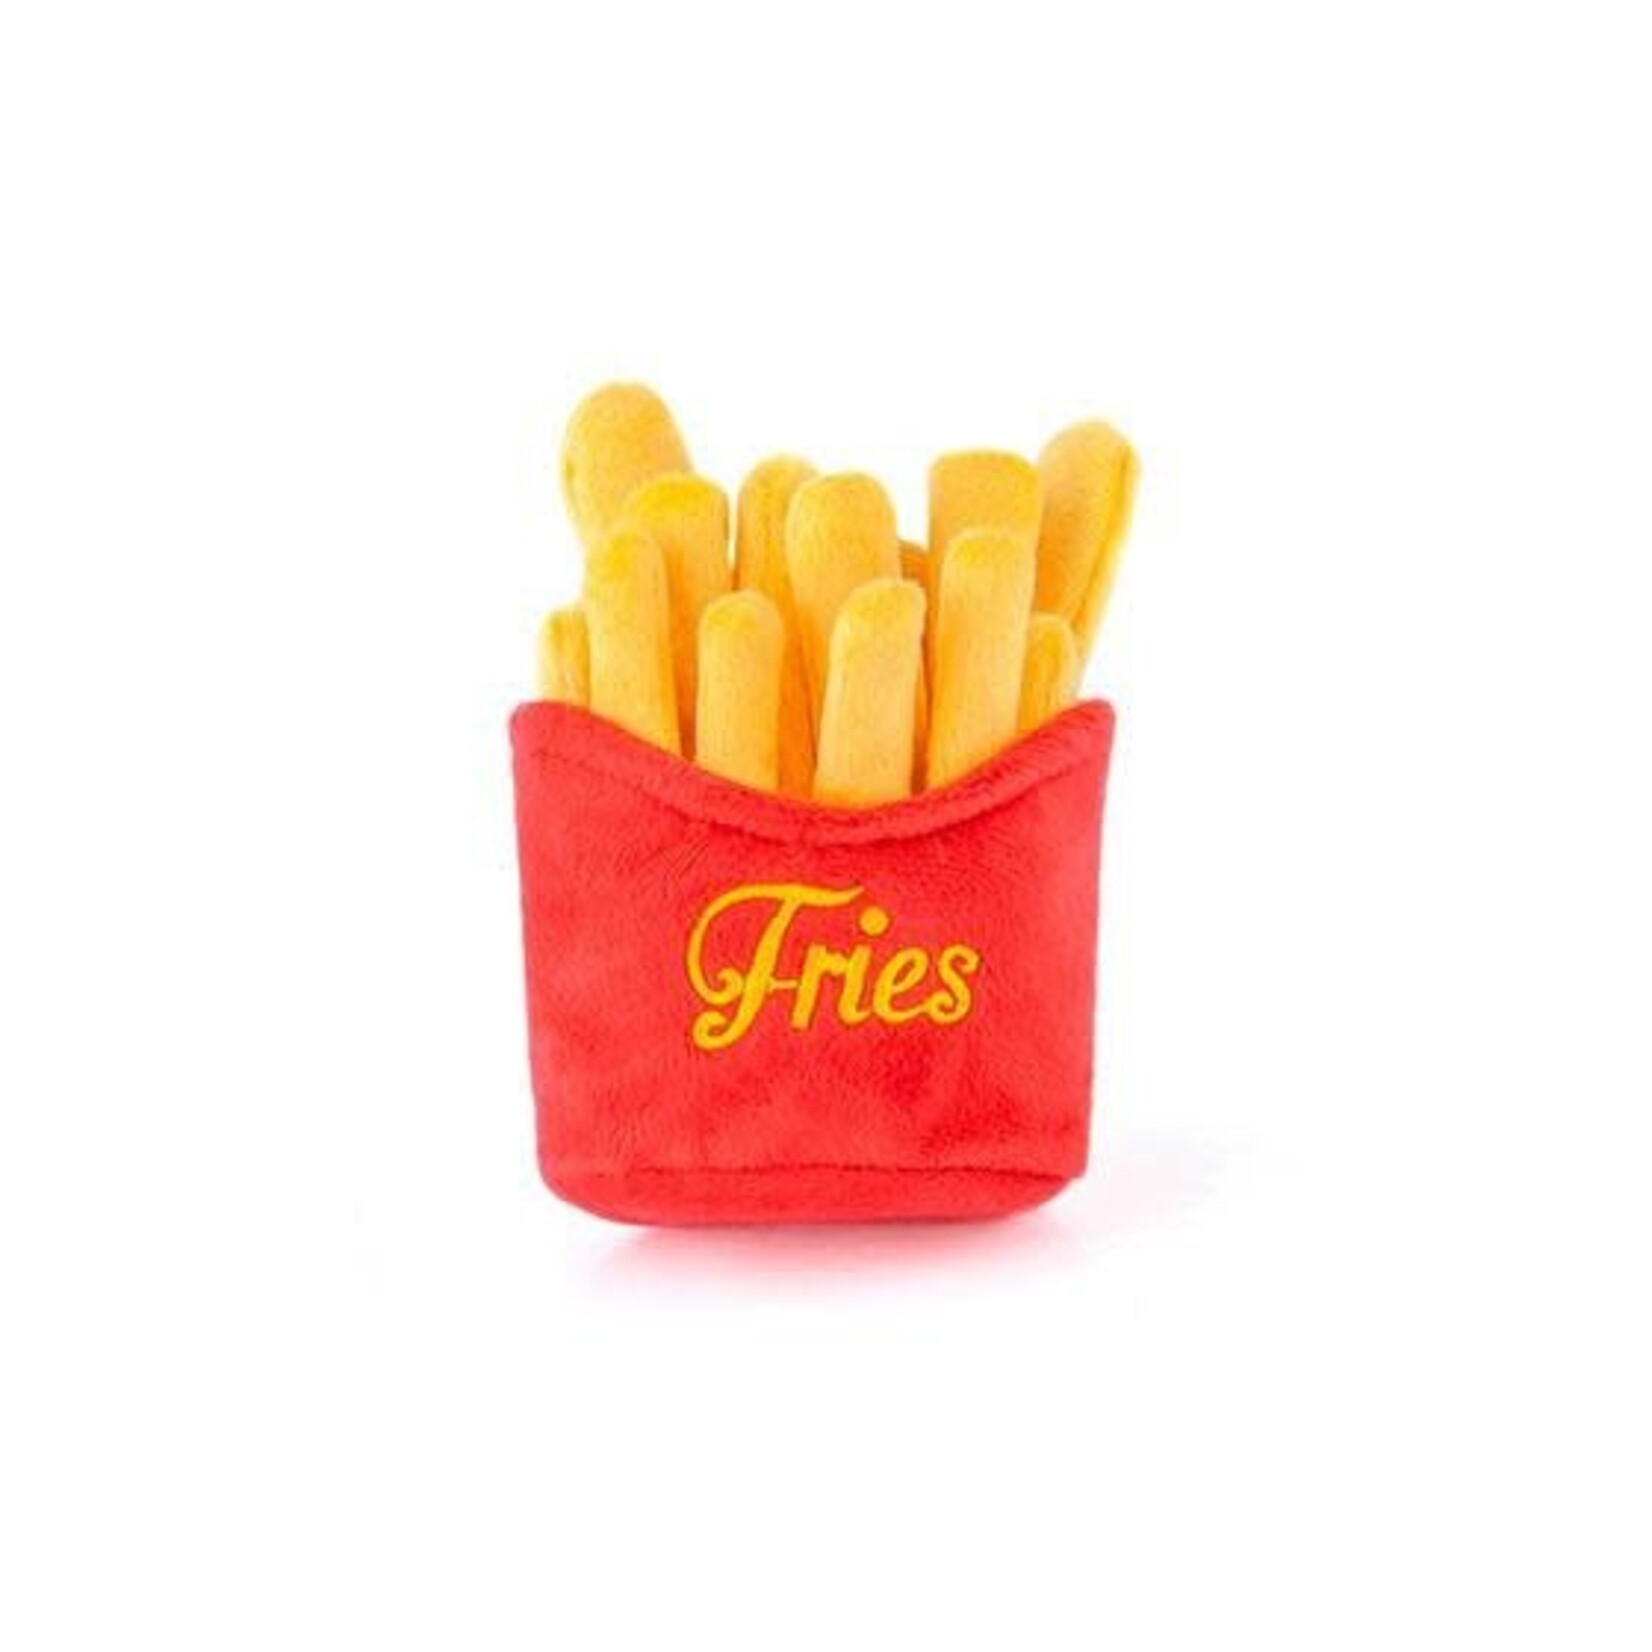 P.L.A.Y Pet Plush Toy, French Fries